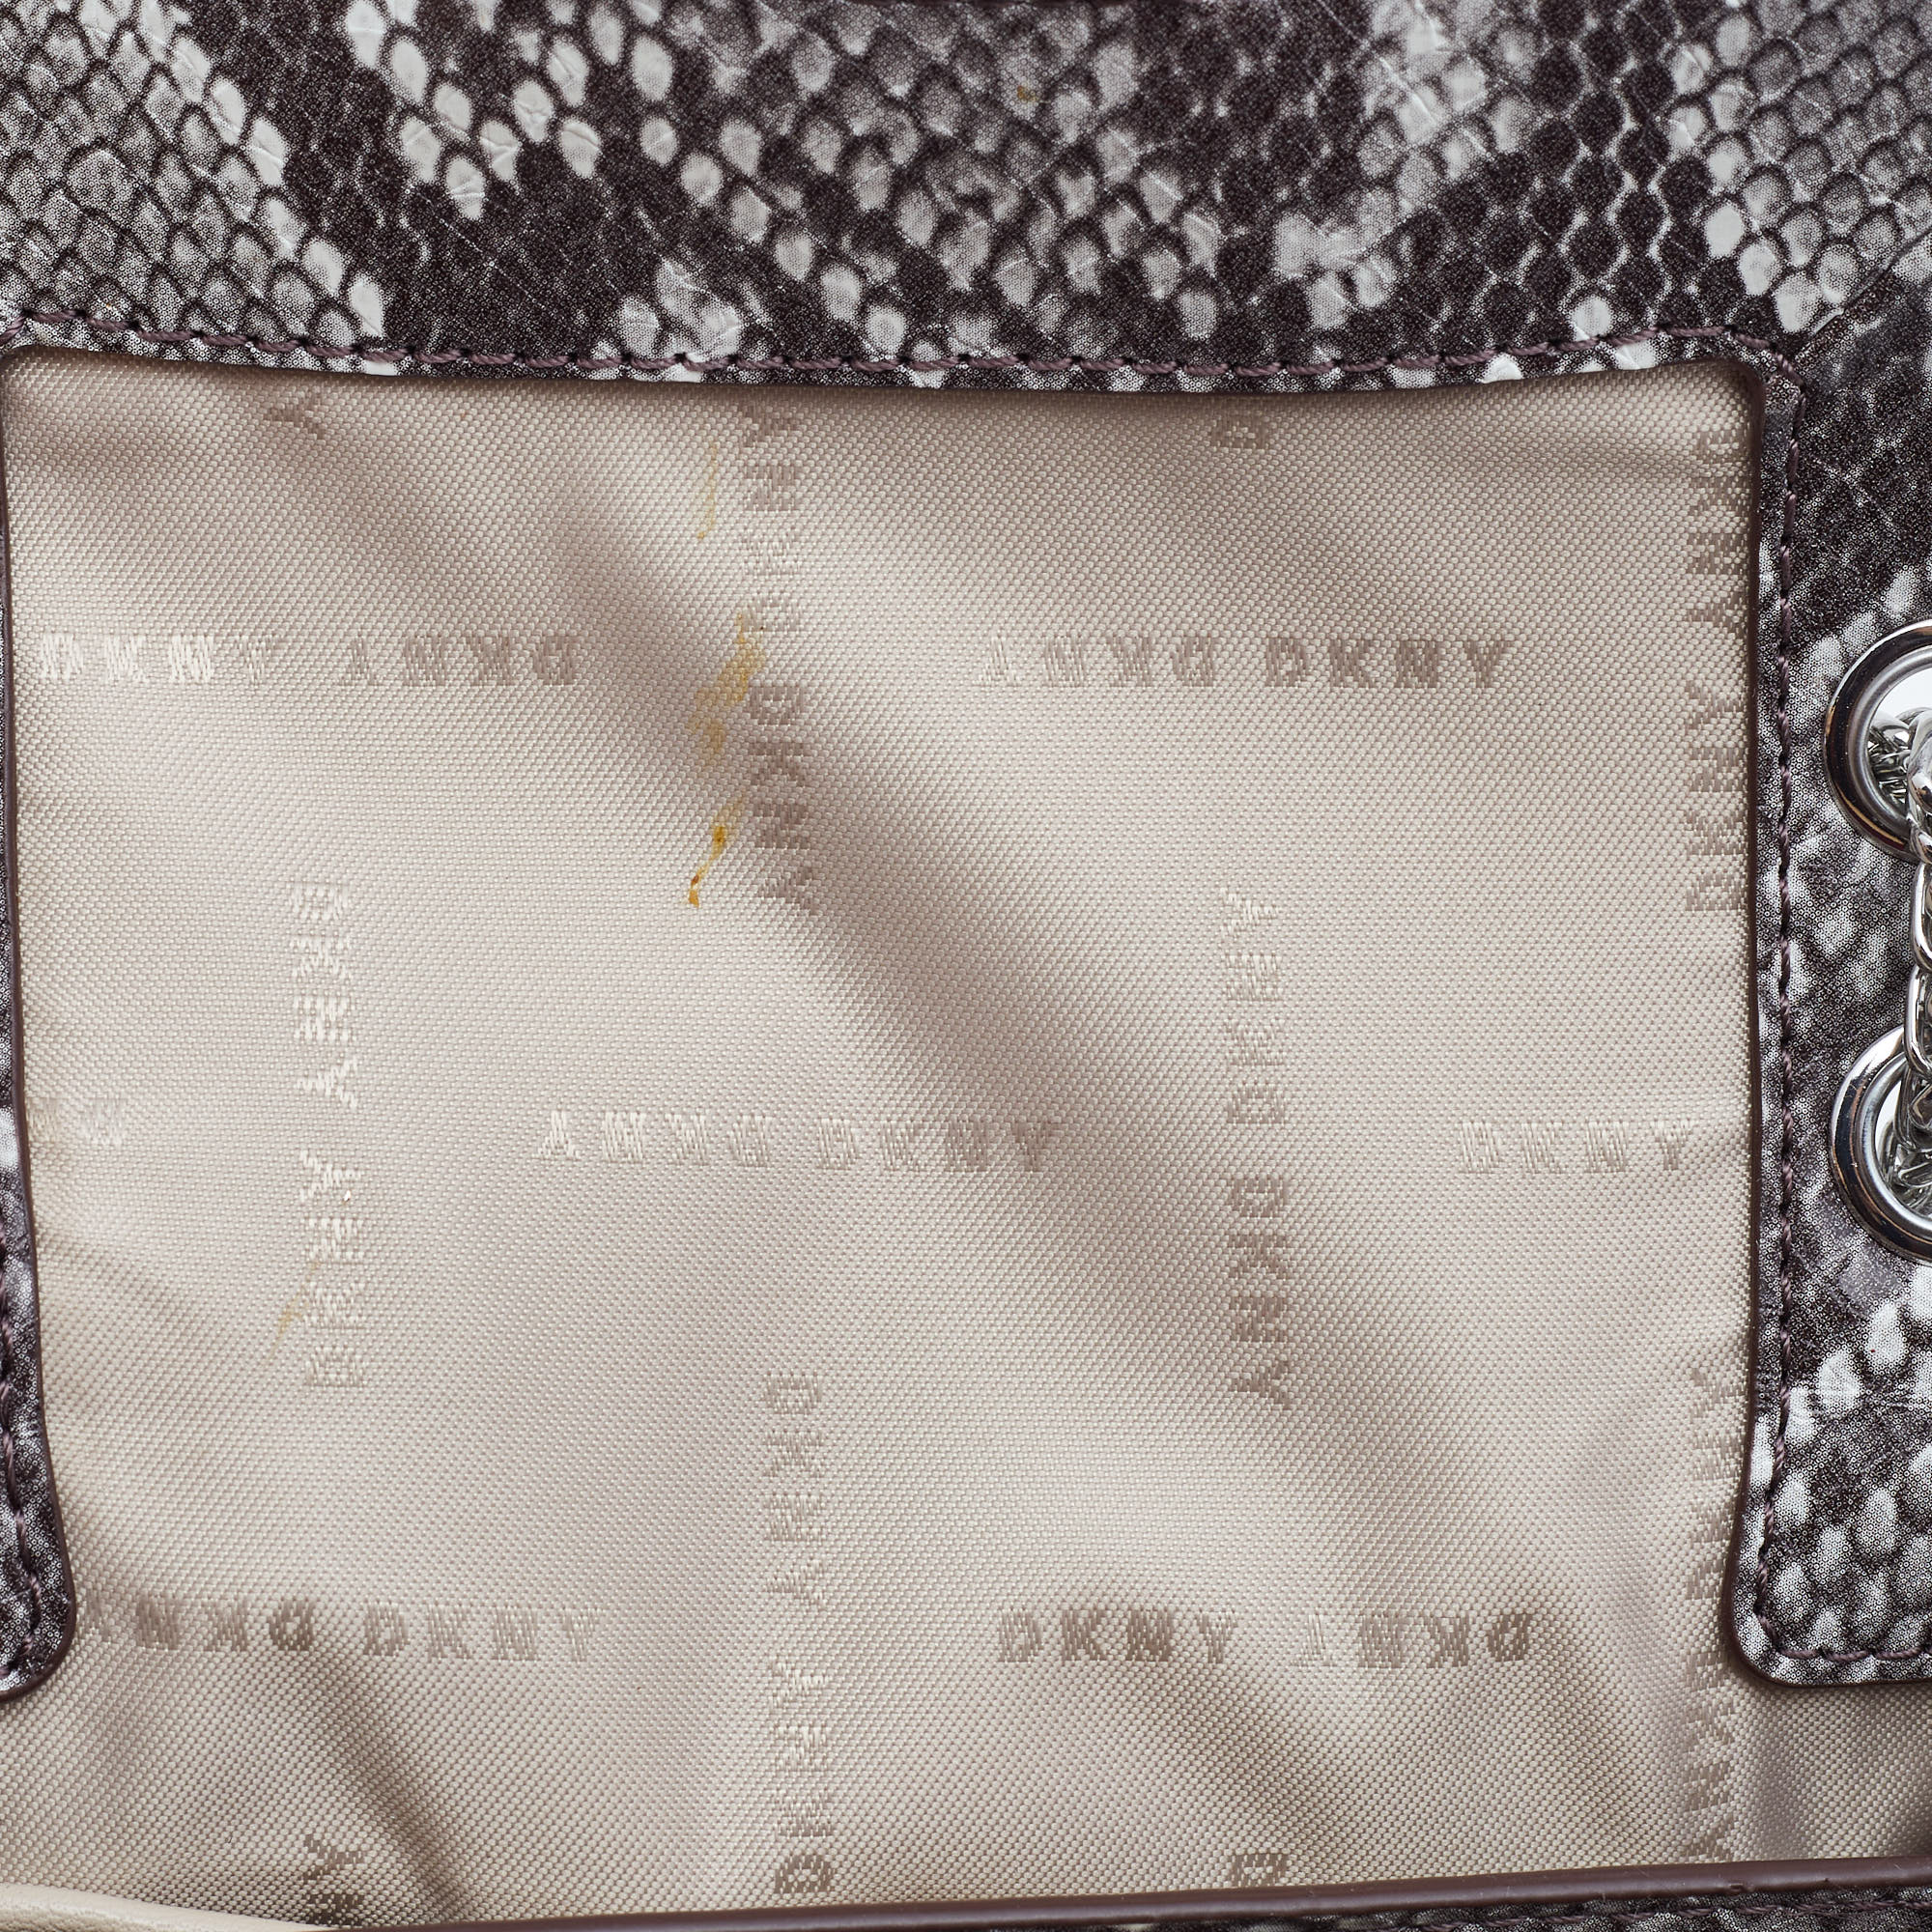 DKNY Grey/Black Python Embossed Leather Flap Crossbody Bag